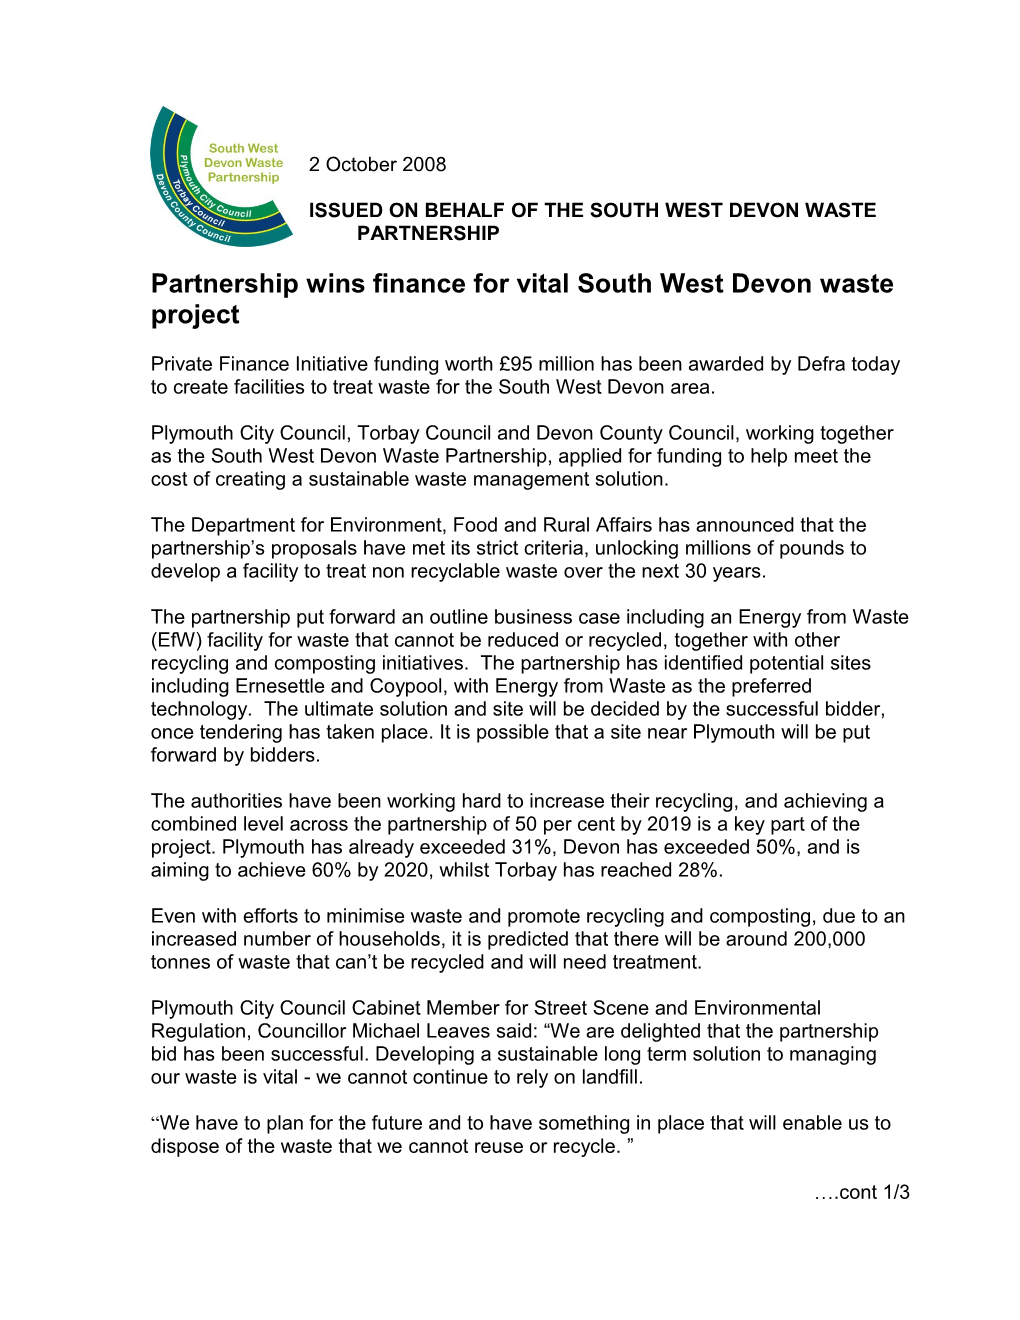 Partnership Wins Finance for Vital South West Devon Waste Project